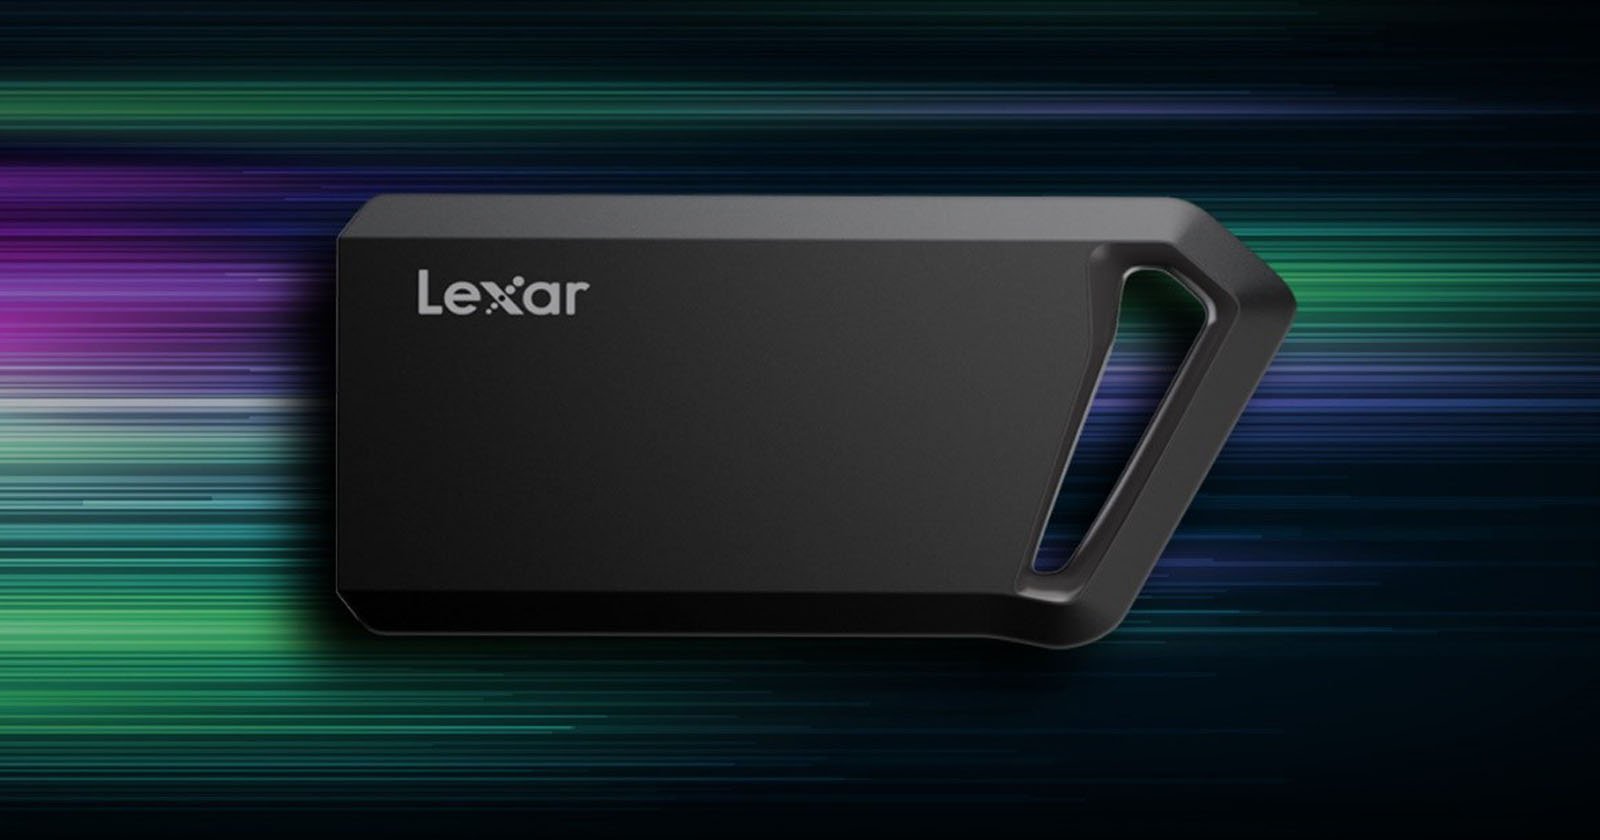  lexar sl600 ssd promises speed portability 